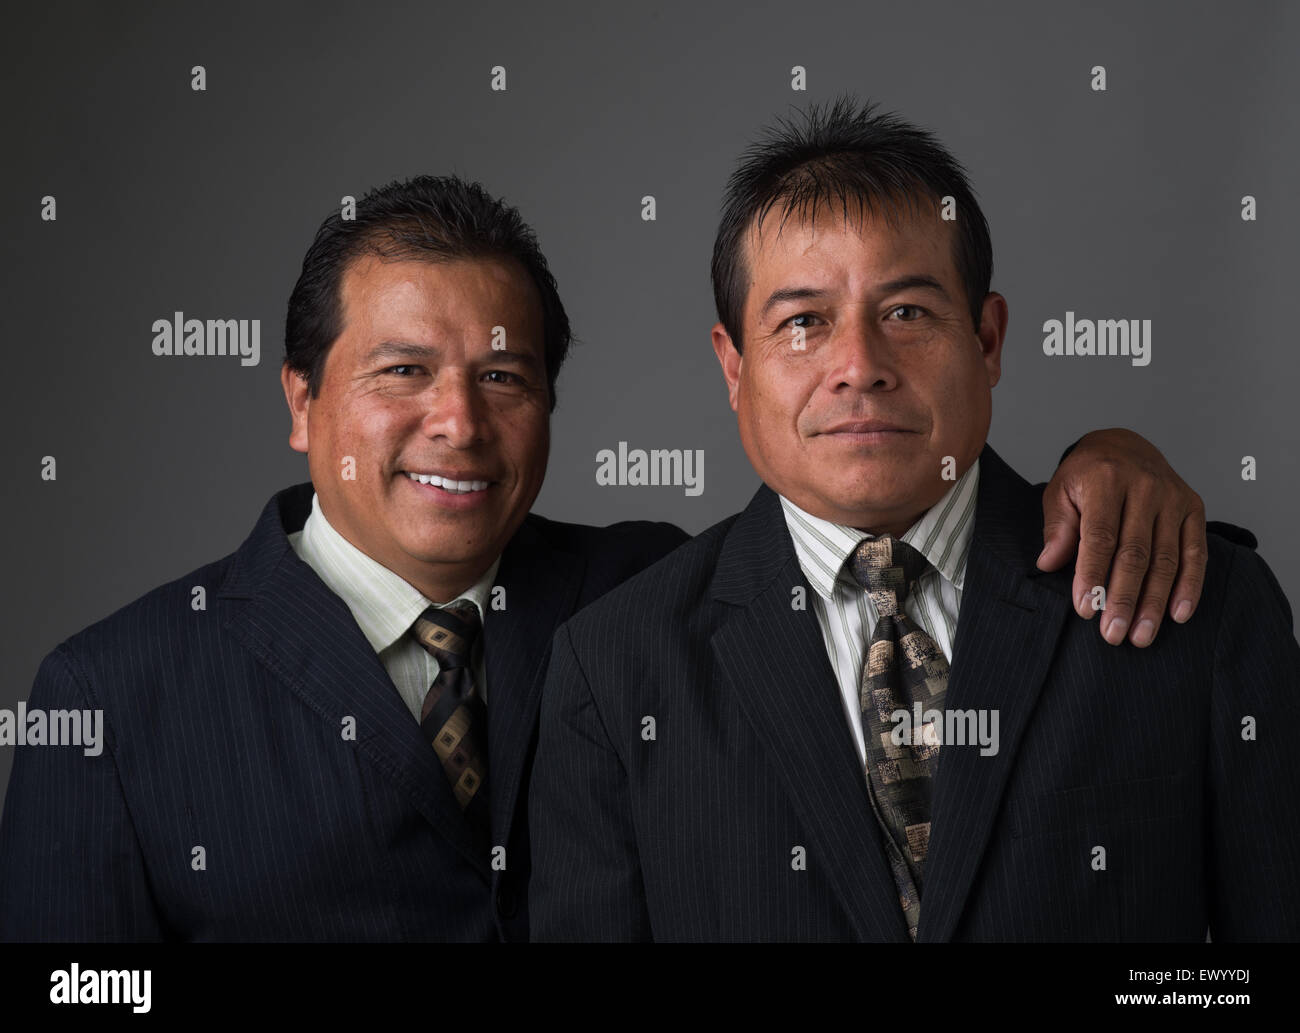 Hispanic business men smiling portrait Stock Photo